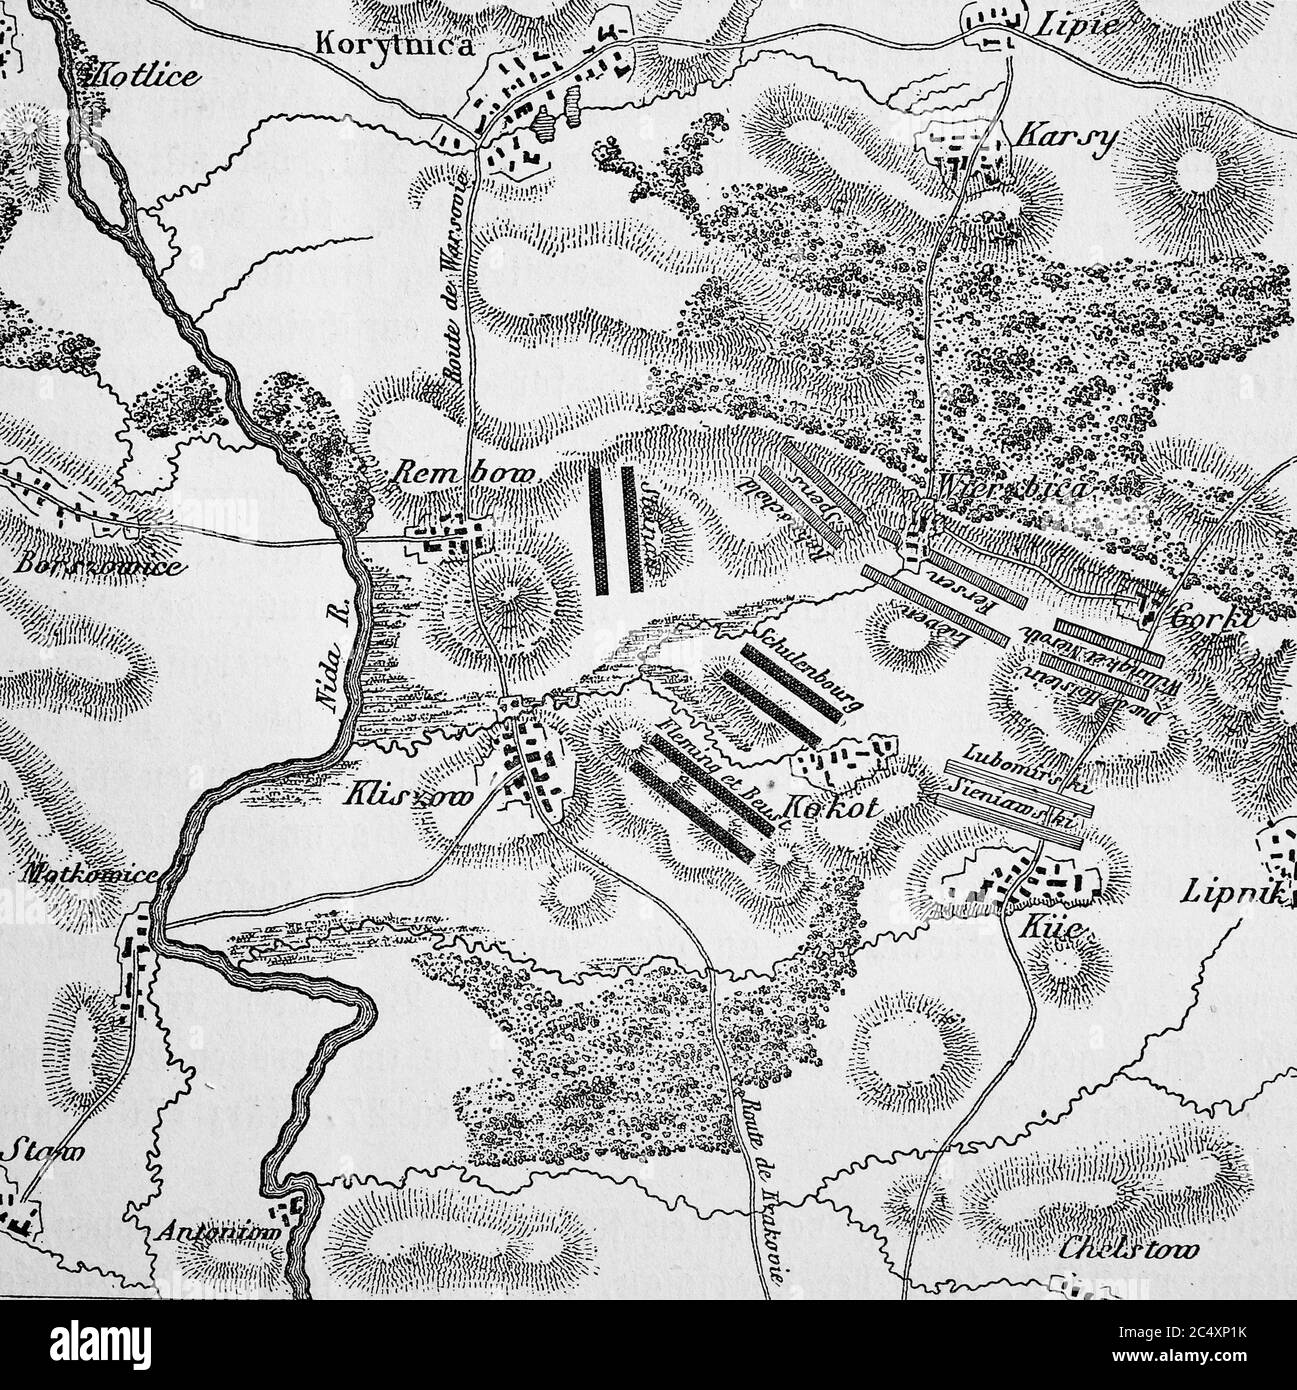 Plan de la bataille de kliszów le 19 juillet 1702 Pologne, dans la bataille de kliszów les armées de Charles XII se sont élevées le 19 juillet 1, 2 et Augustus II contre. Klissow est un lieu au sud de Kielce / Plan der Schlacht BEI Klissow am 19. Juli 1702, Polen, in der Schlacht BEI Klissow standen sich am 19. Juli 1702 die Armeen von Karl XII. Et August II gegenueber. Klissow ist ein Ort suedlich von Kielce Banque D'Images